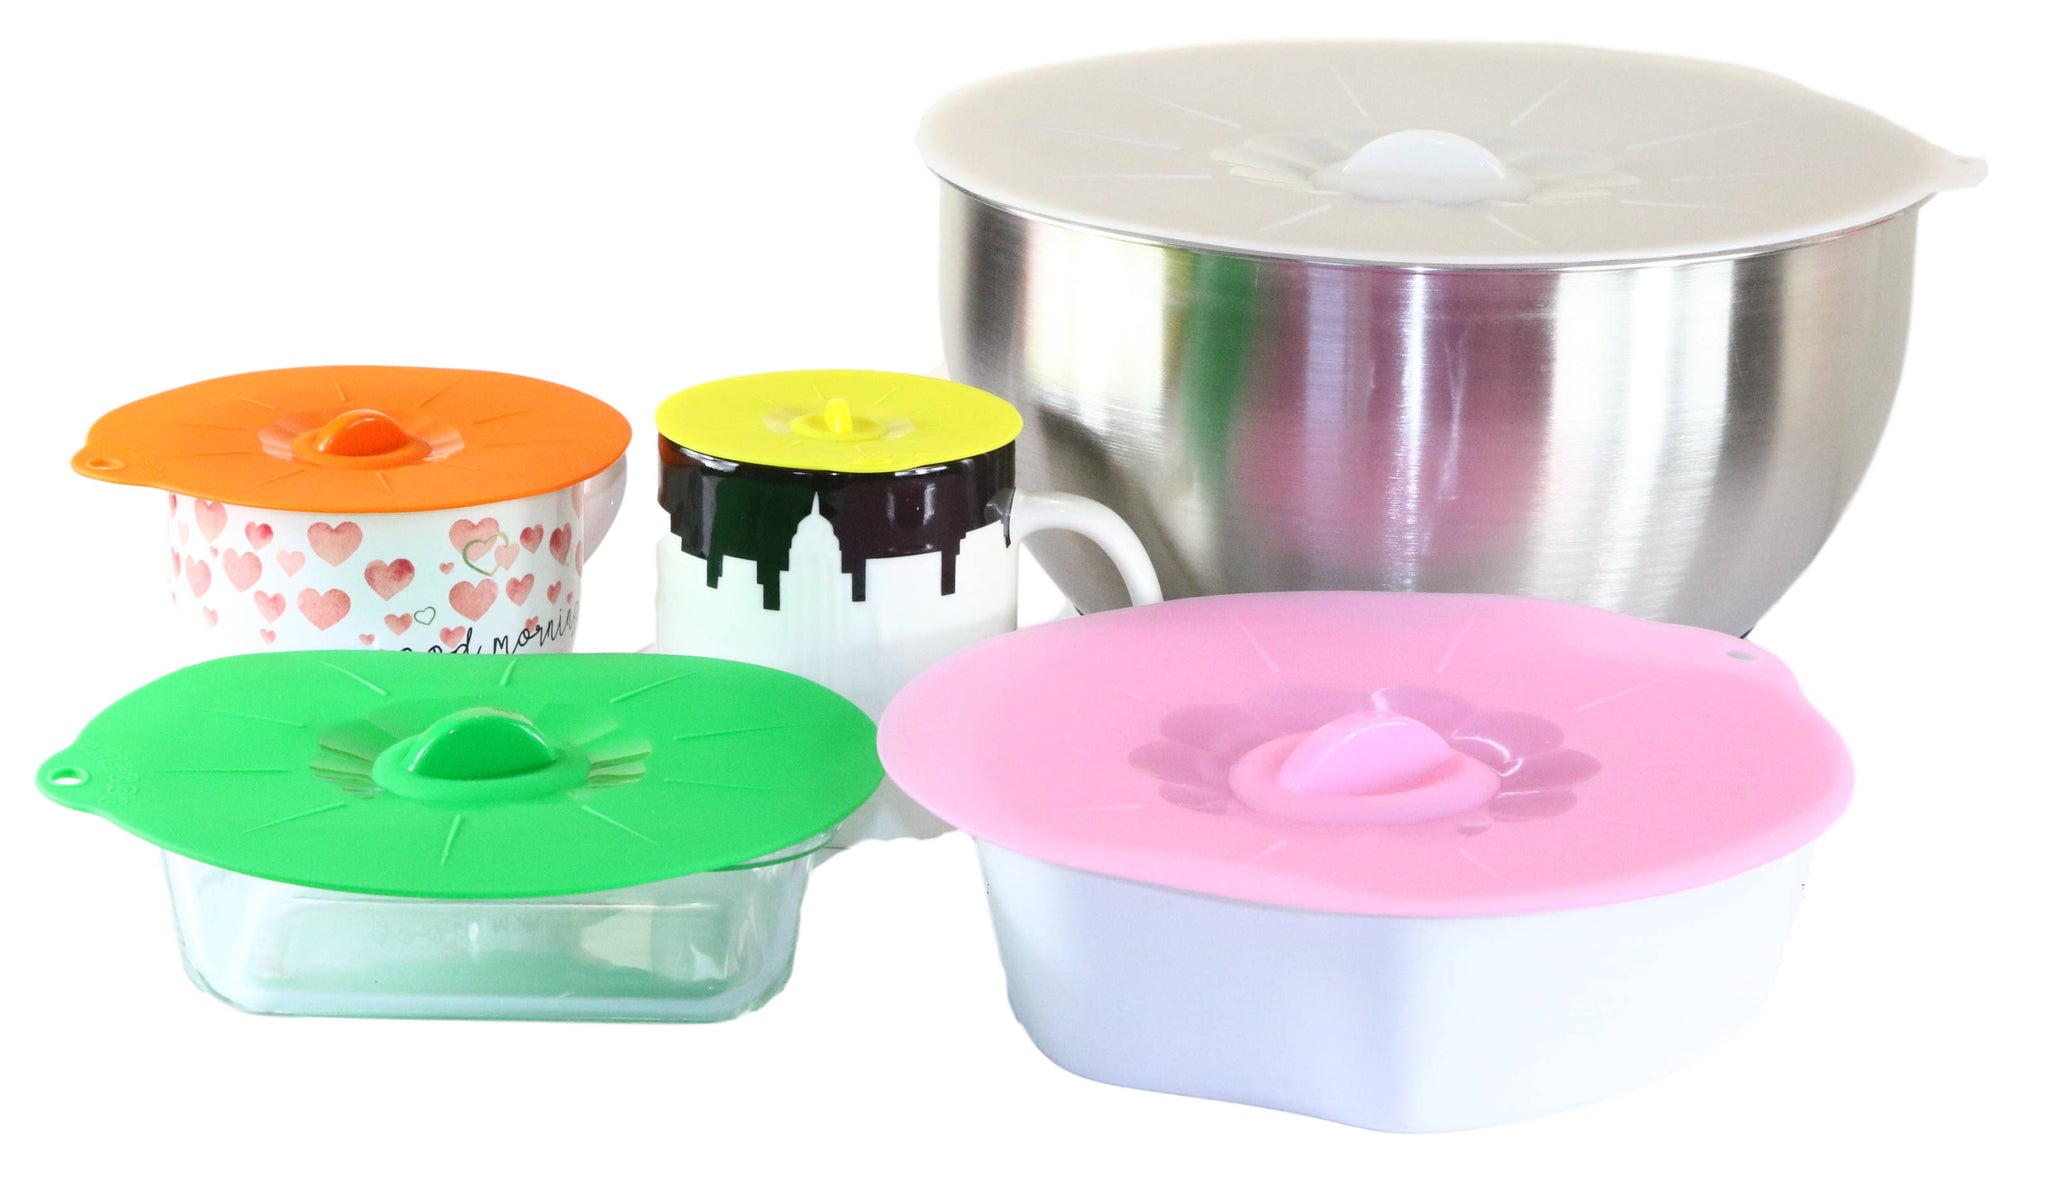 Silicone Lids, Microwave Splatter Cover, 5 Sizes Reusable Heat Resistant  Food Suction Lids Fits Cups, Bowls, Plates, Pots, Pans, Skillets, Stove  Top